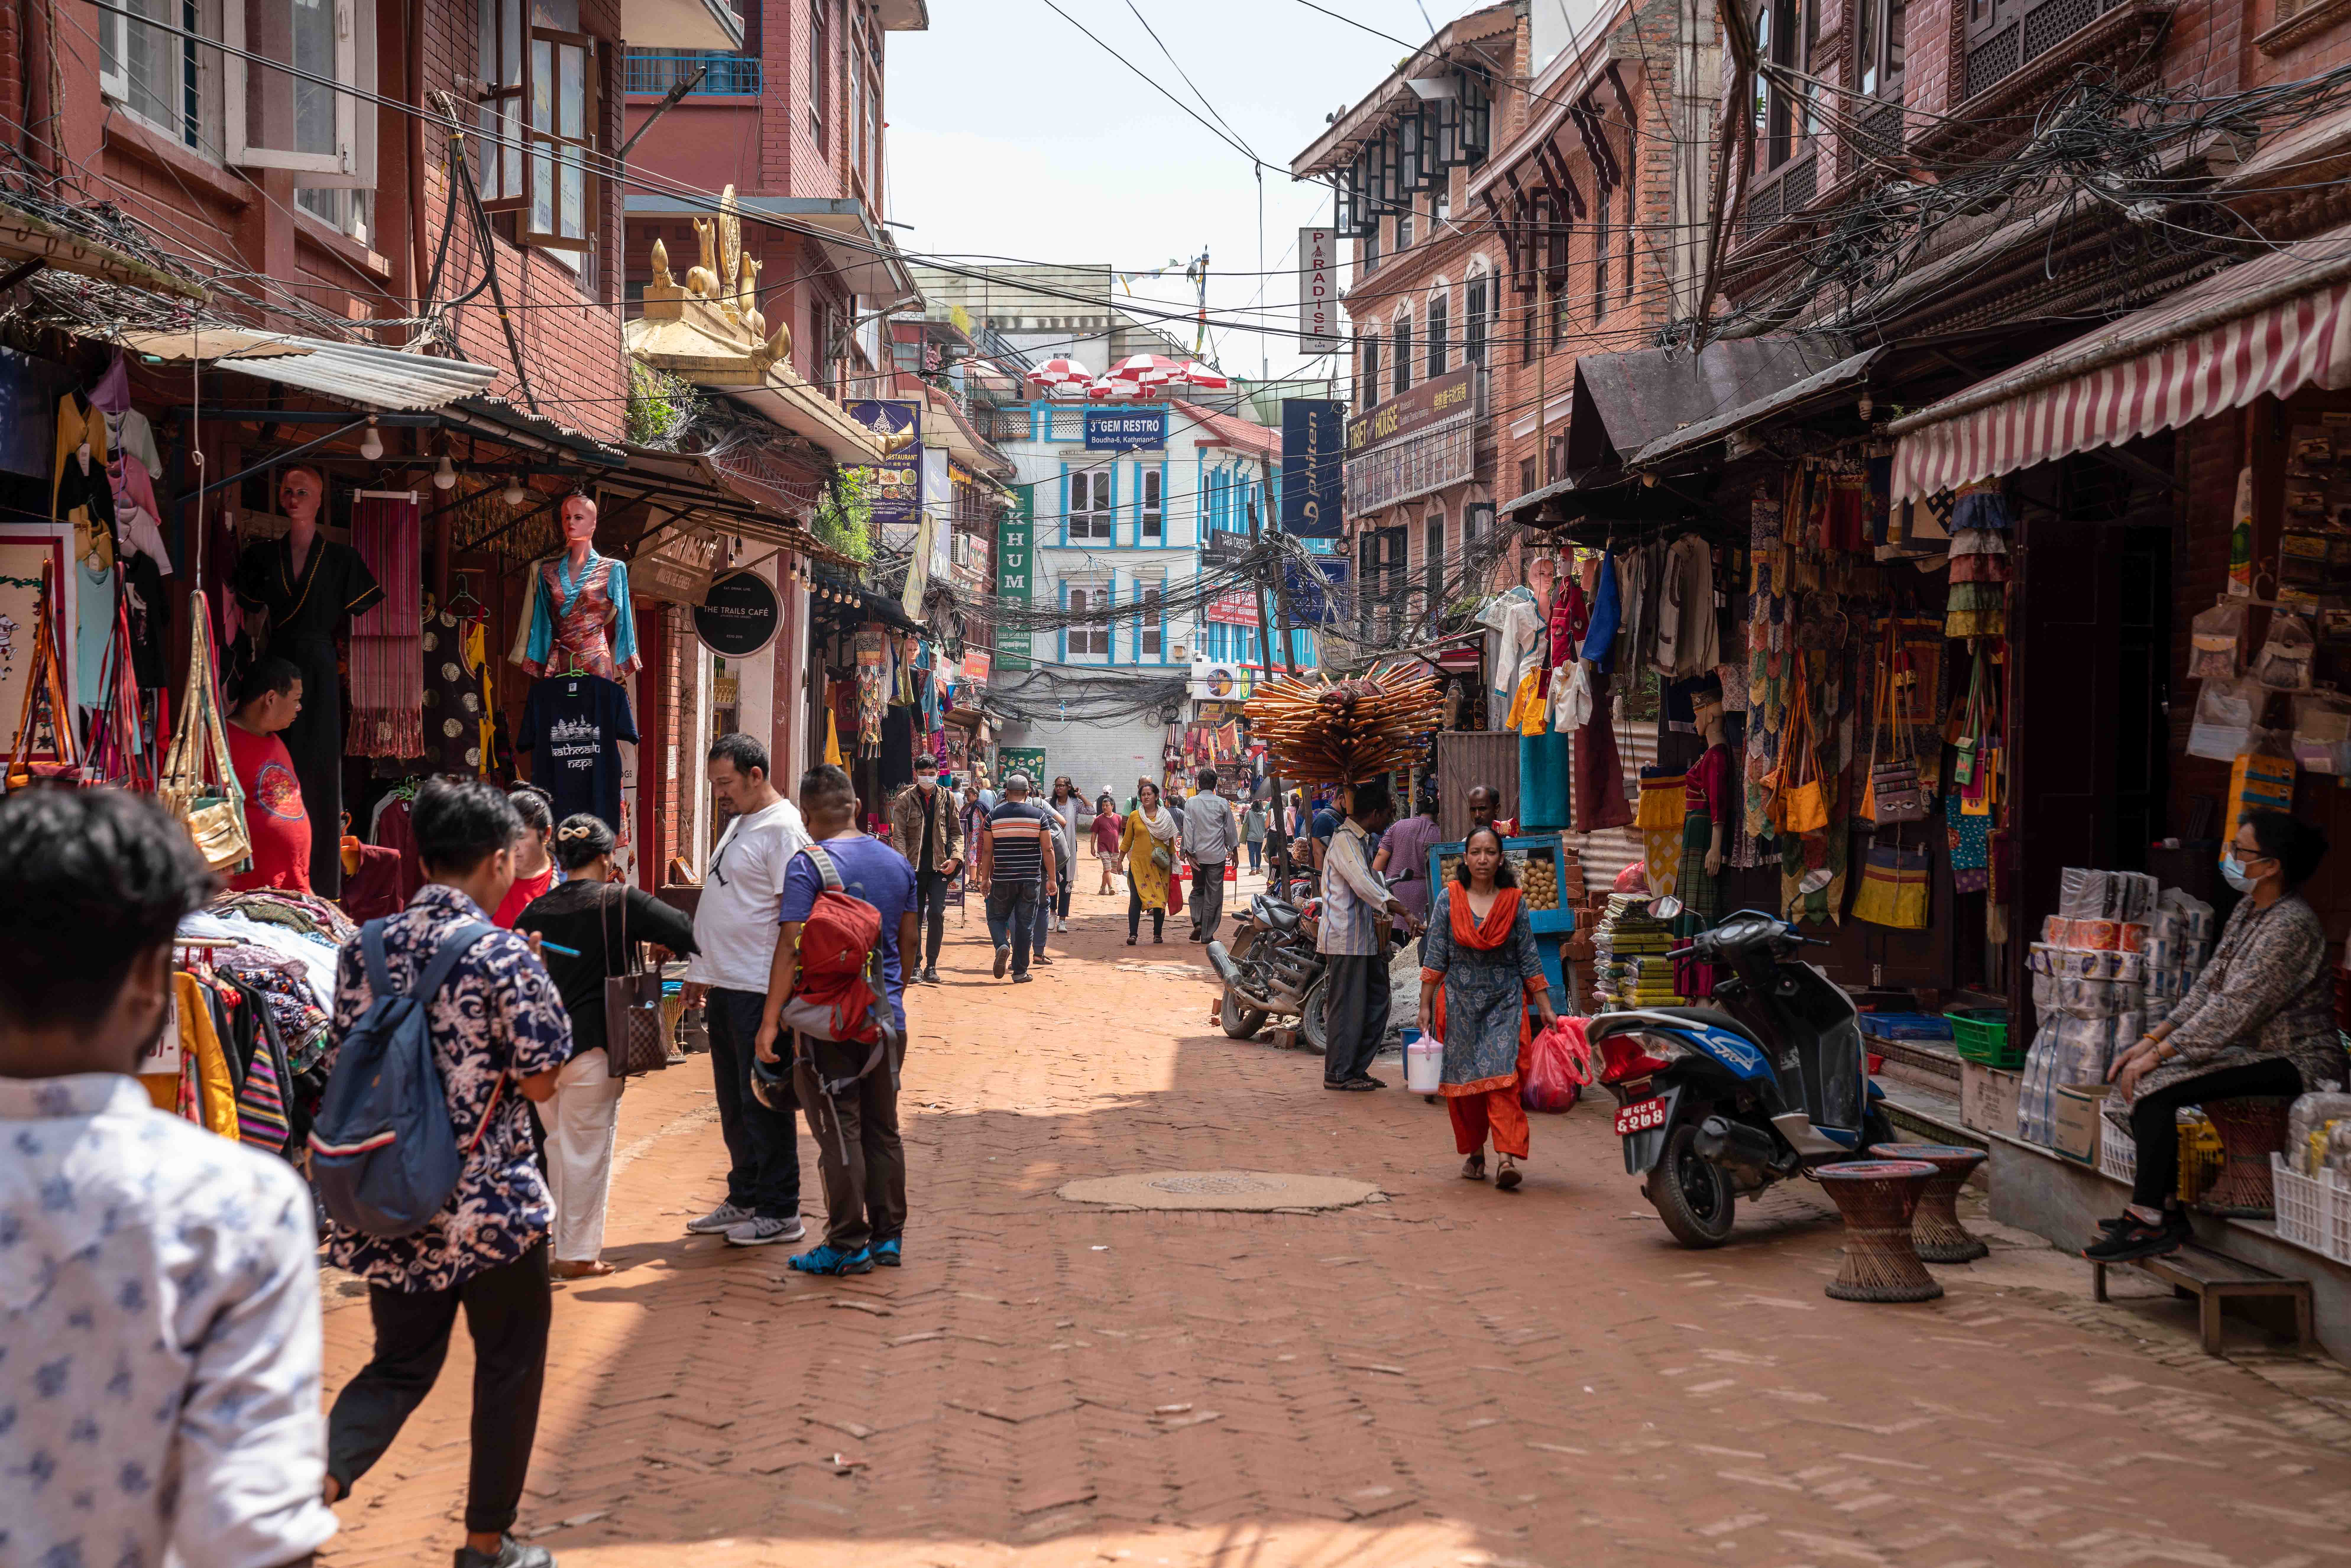 An old brick bustling street in Kathmandu, Nepal near the Boudanathstupa.